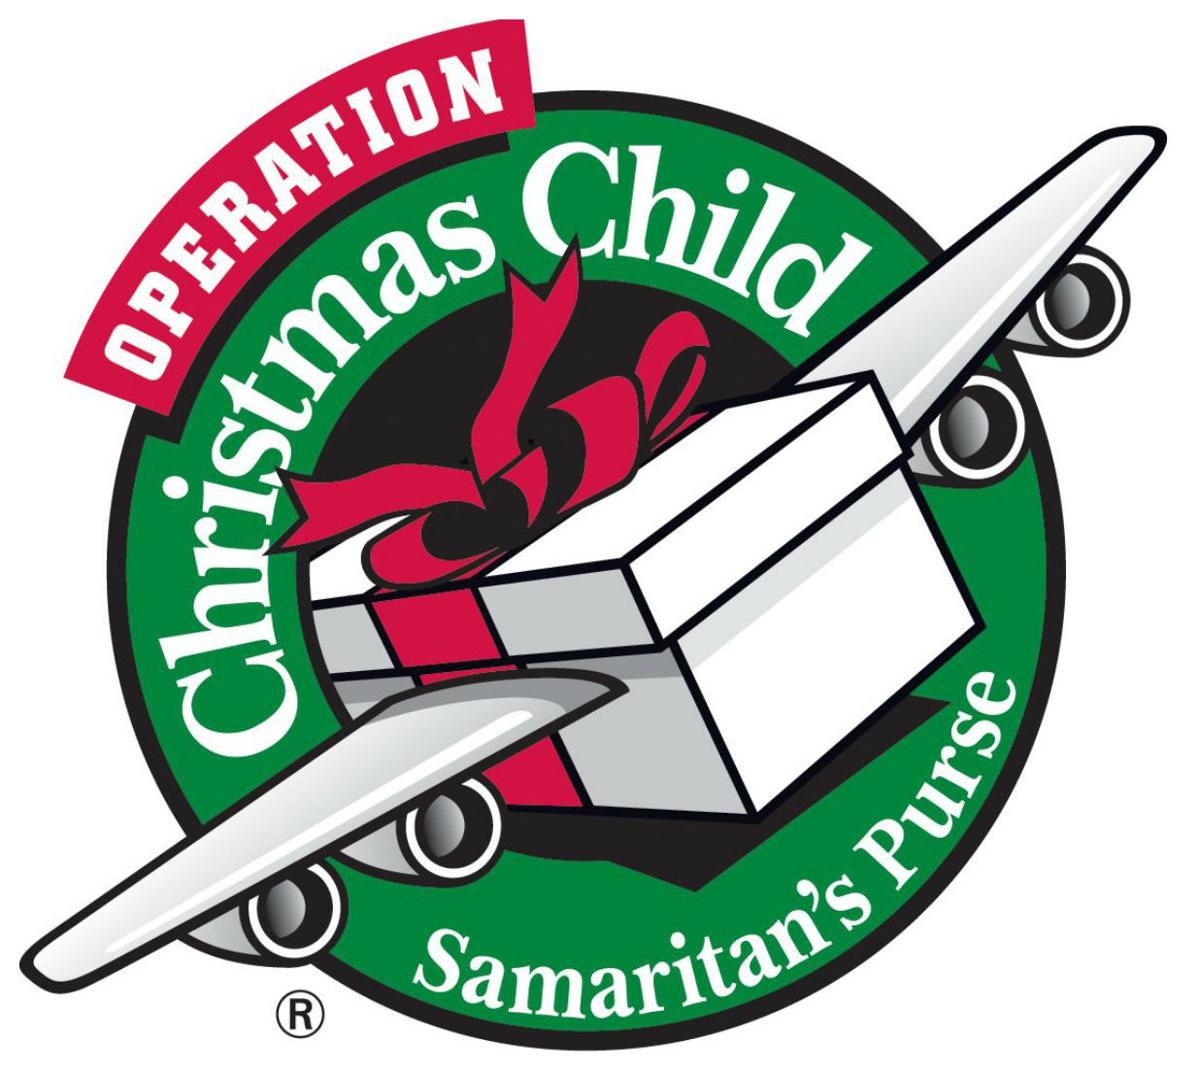 Operation Christmas Child (Dec 7)